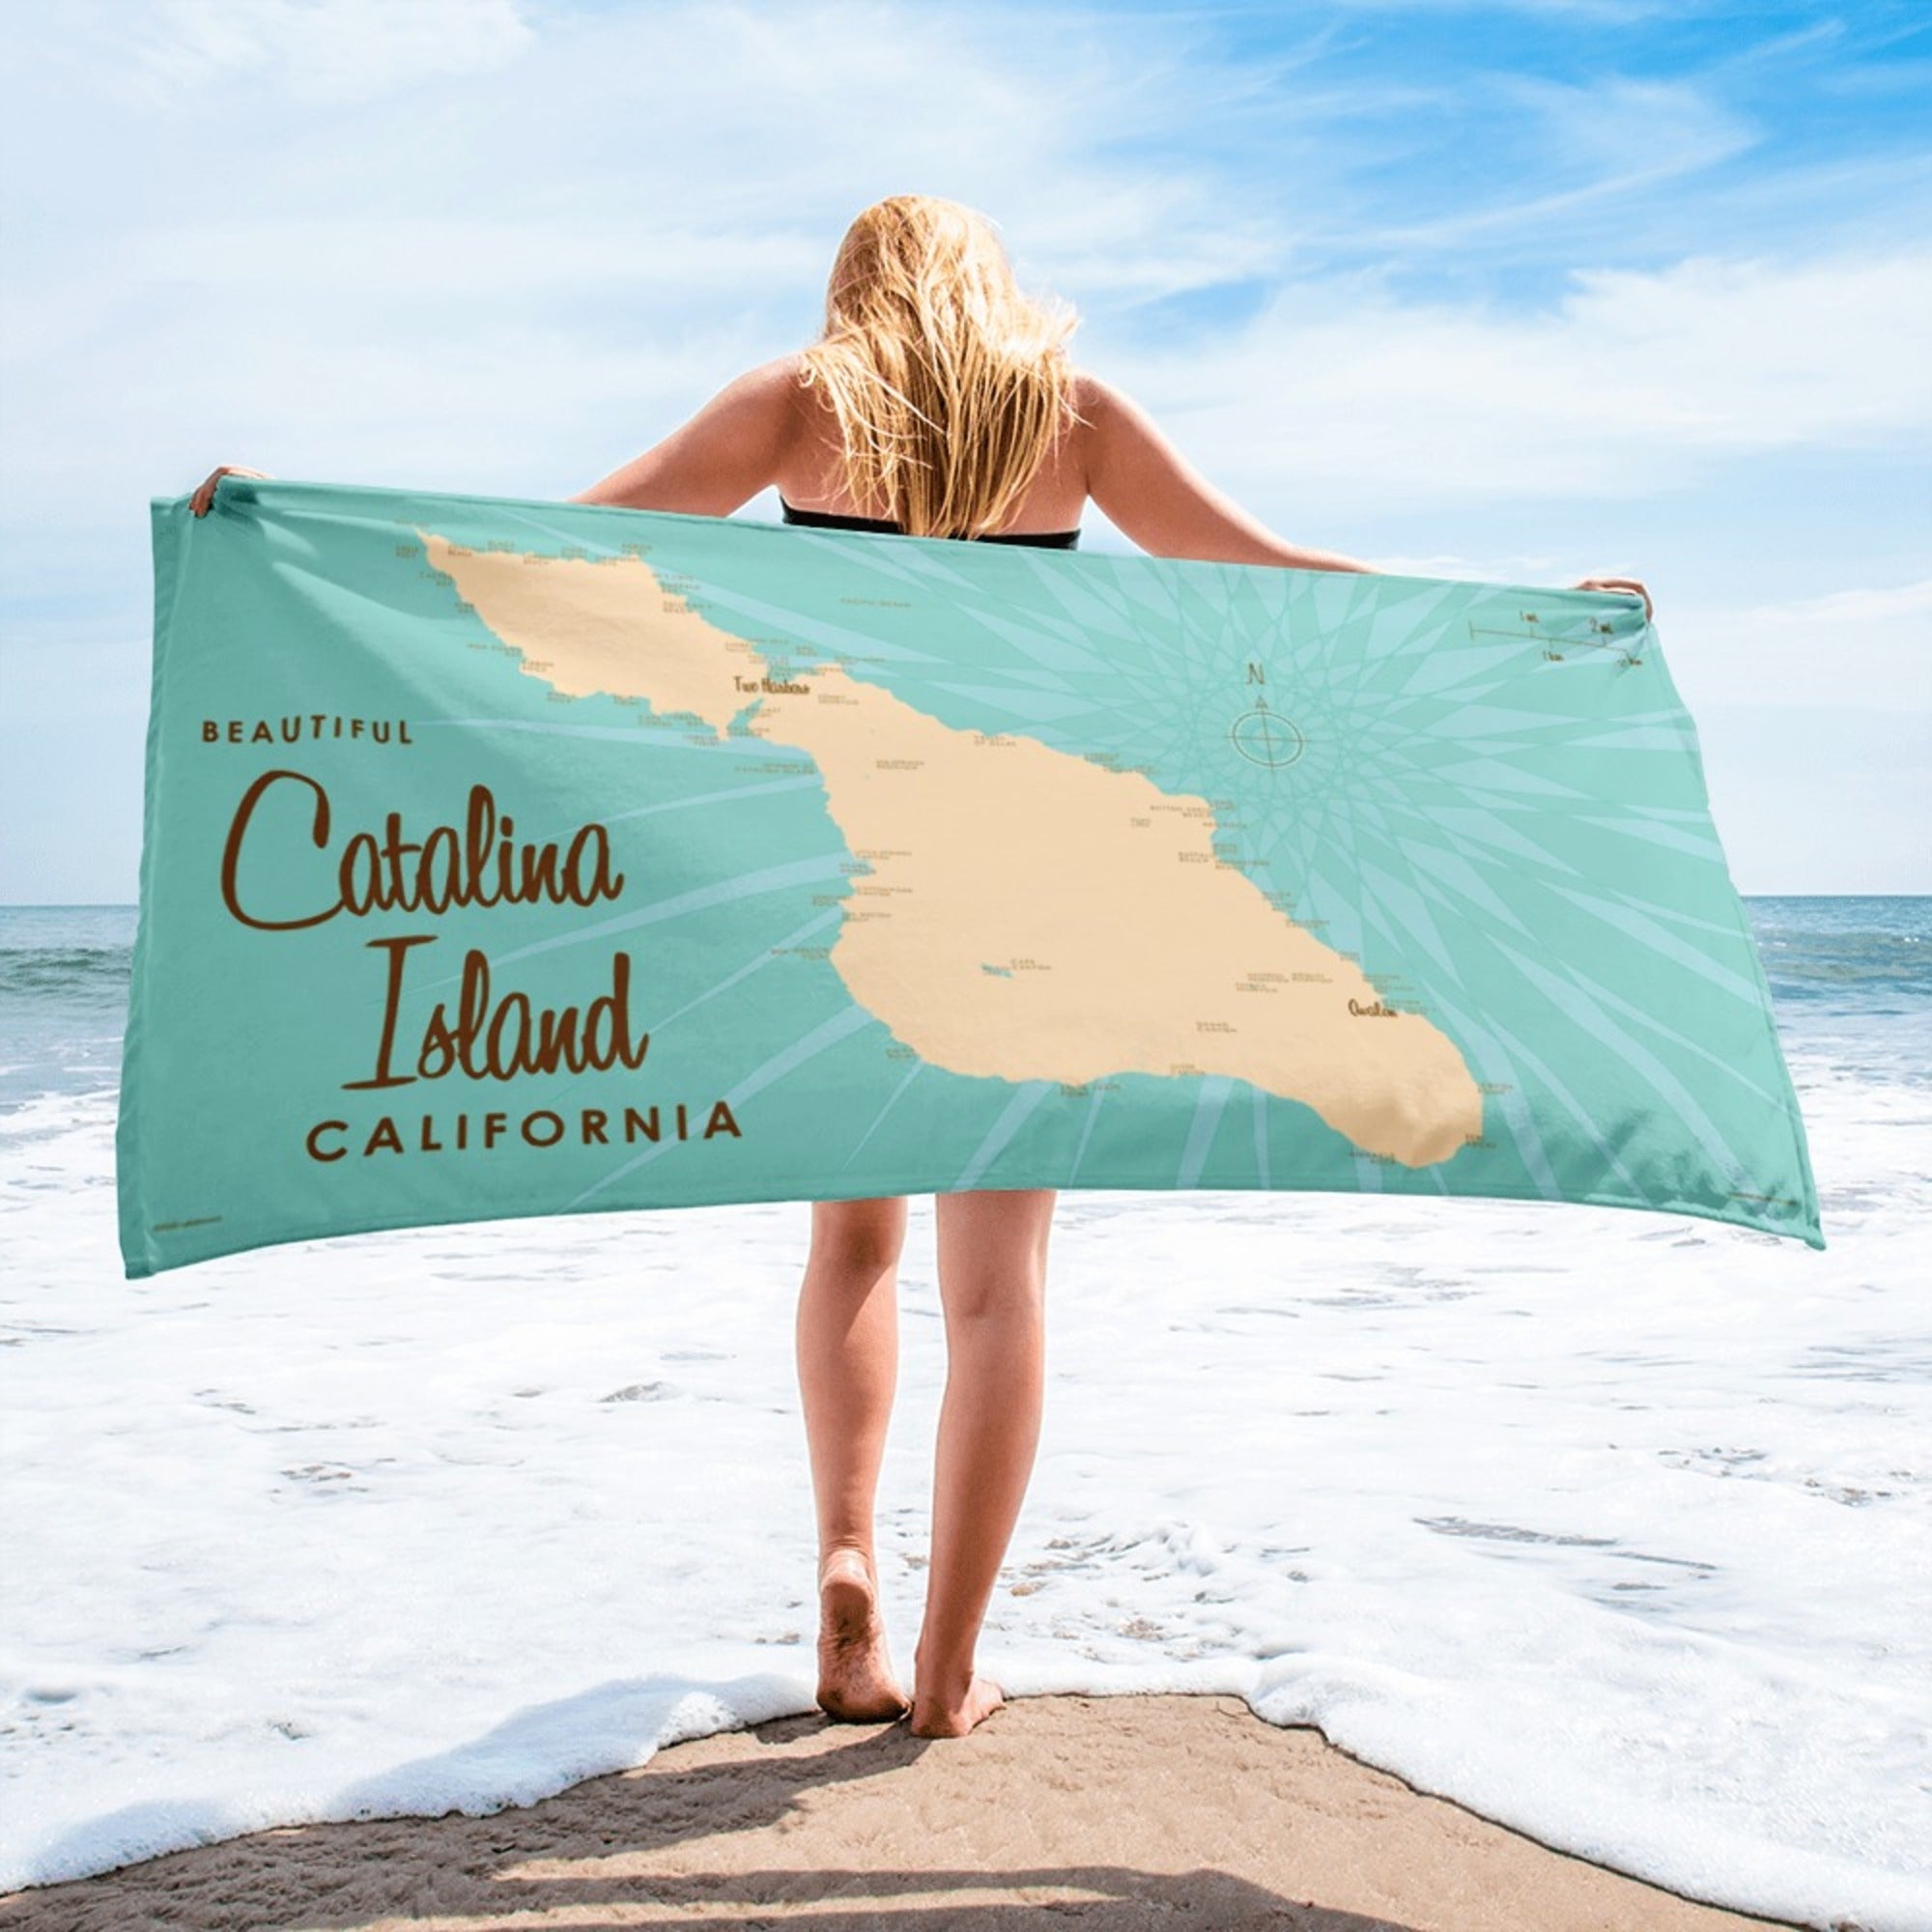 Catalina Island California Beach Towel